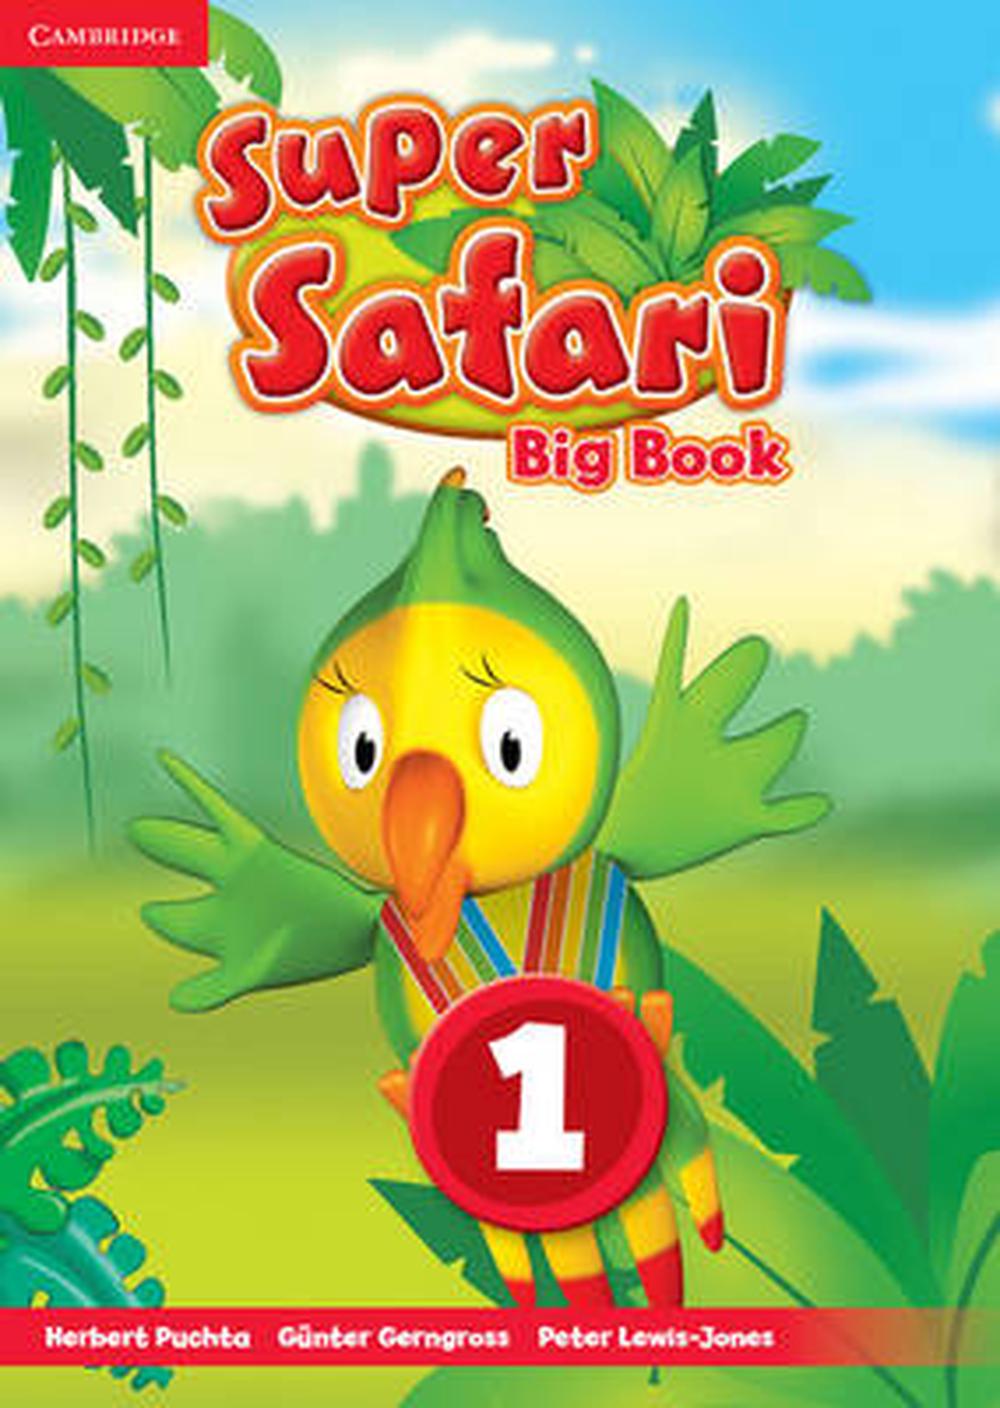 spl safari books online